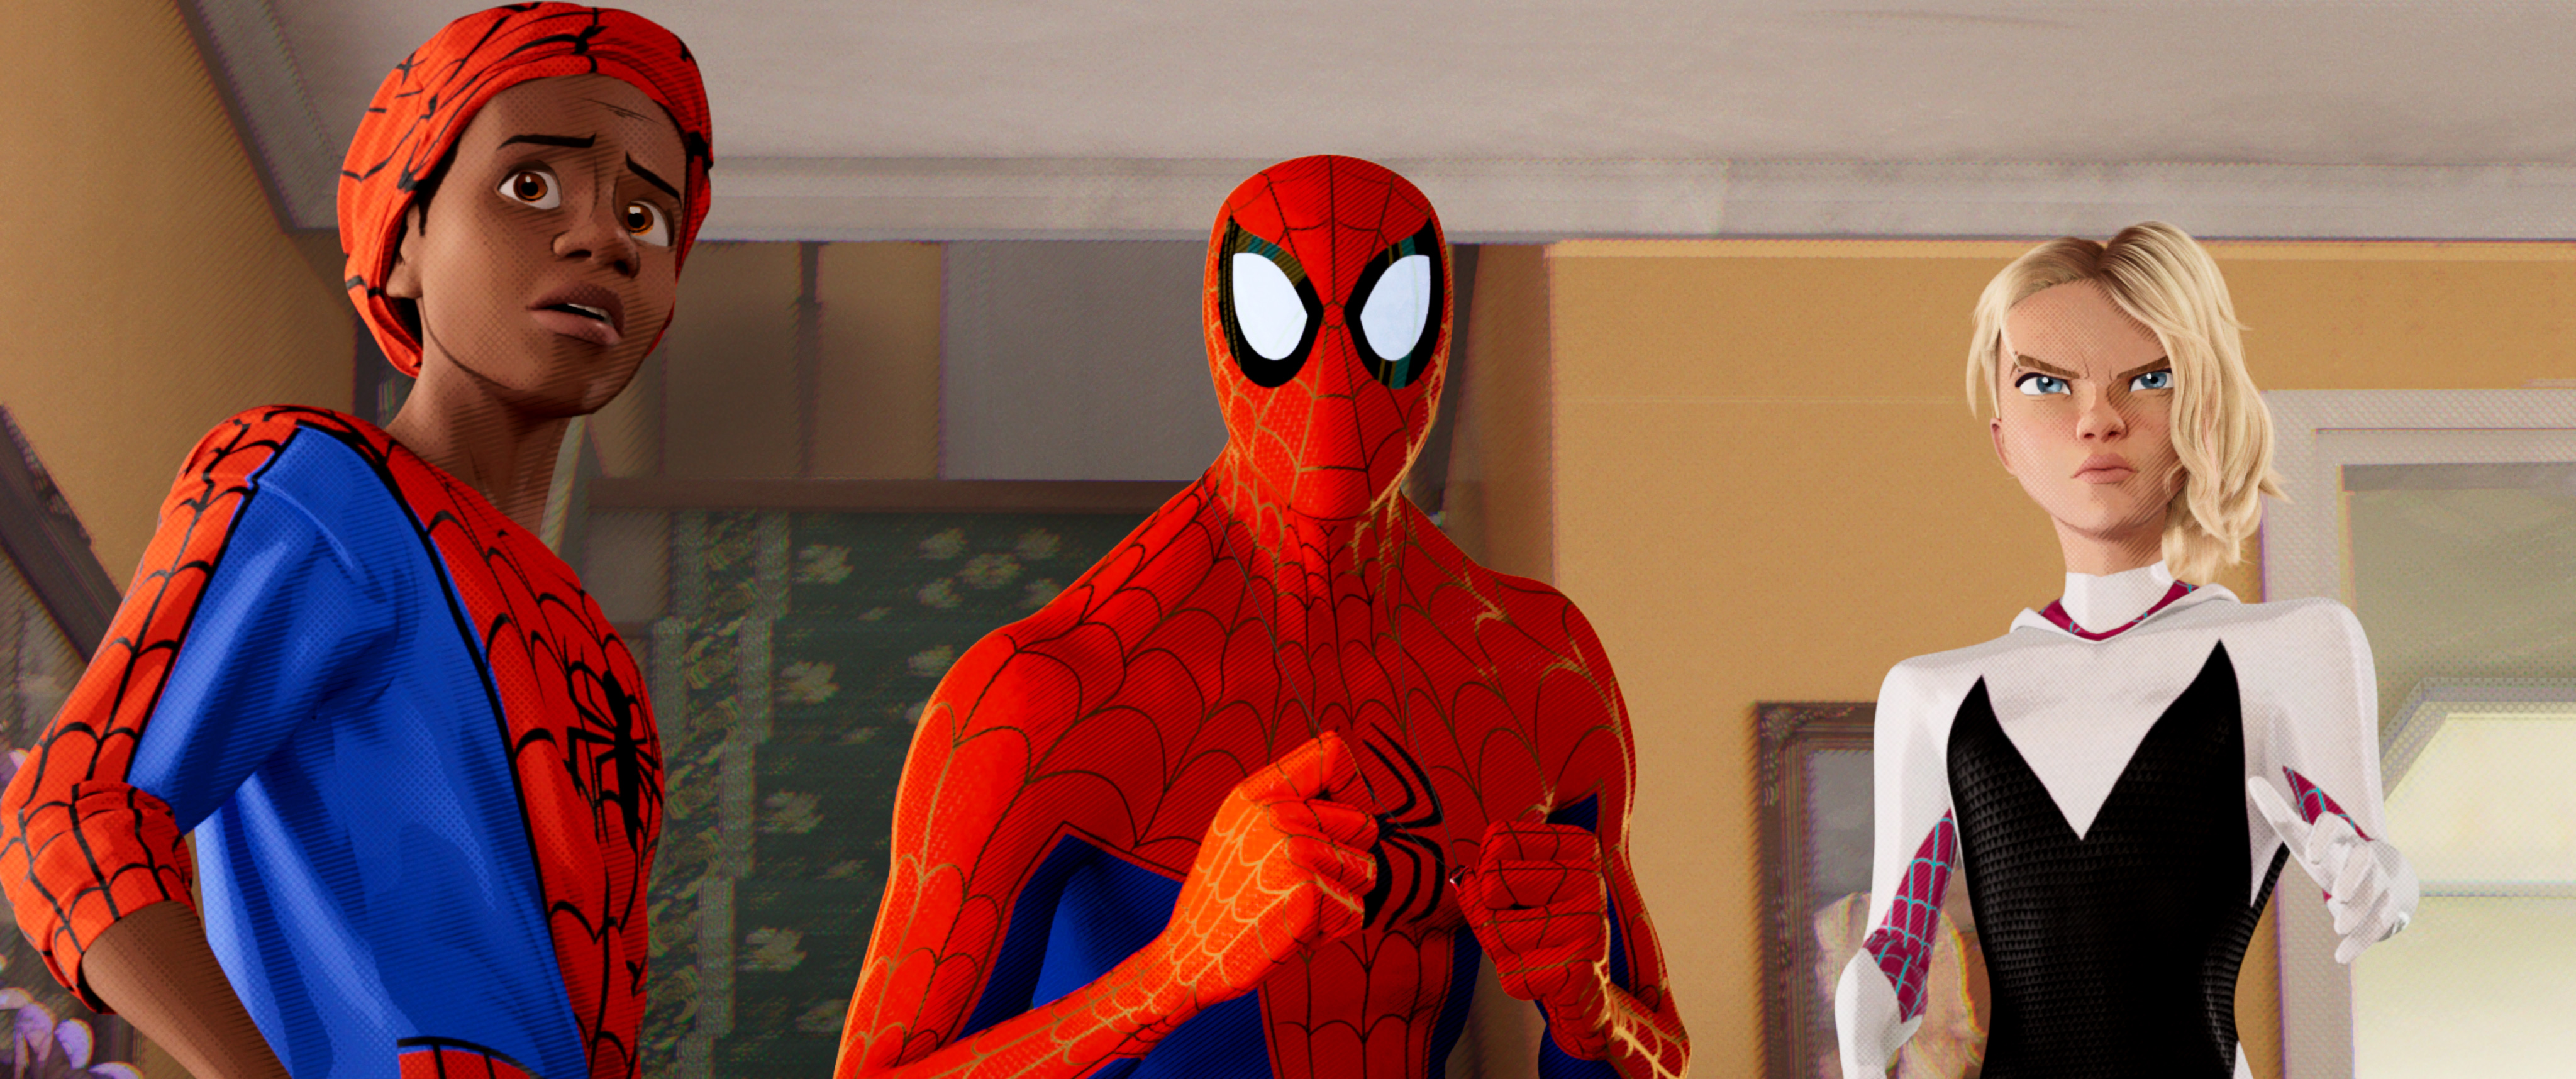 Spider-Man™: Into the Spider-Verse Gallery 15